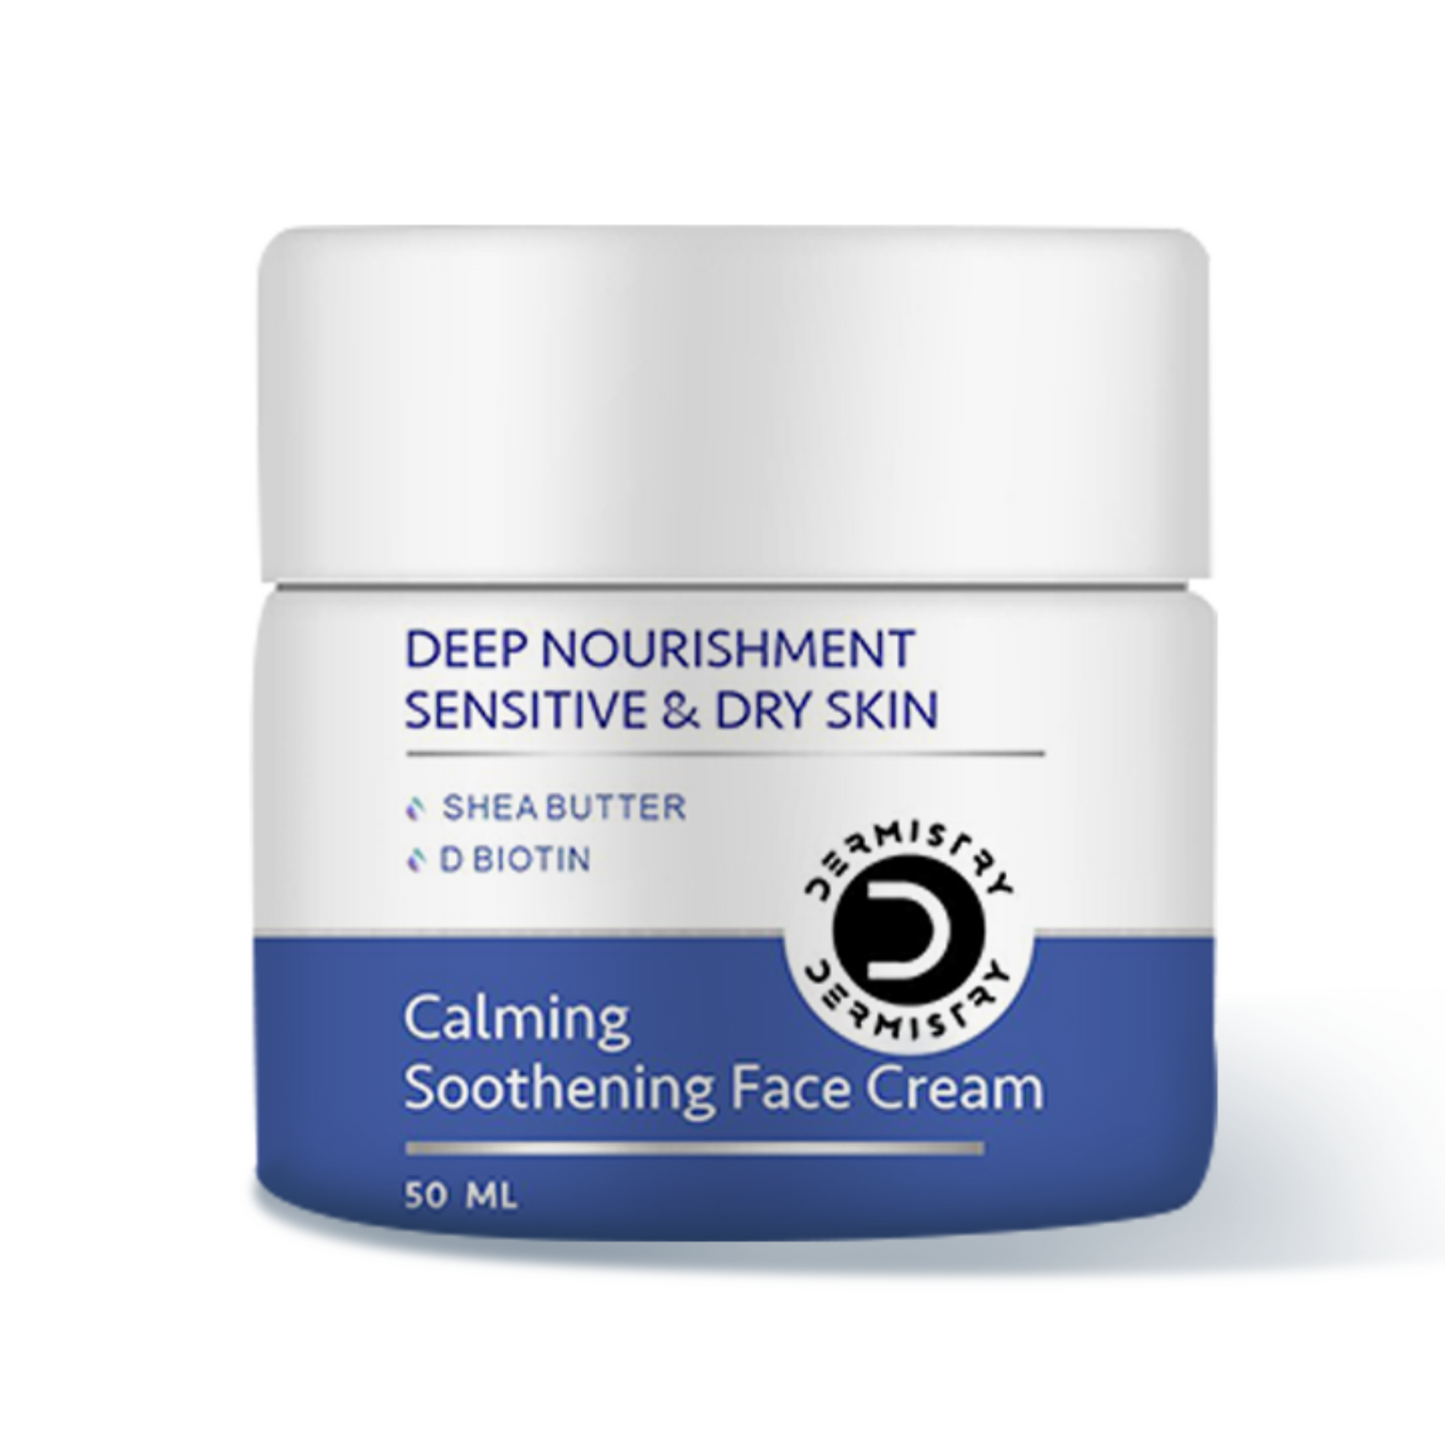 Dermistry Deep Nourishment Sensitive & Dry Skin Calming Soothening Face Cream, 50ml